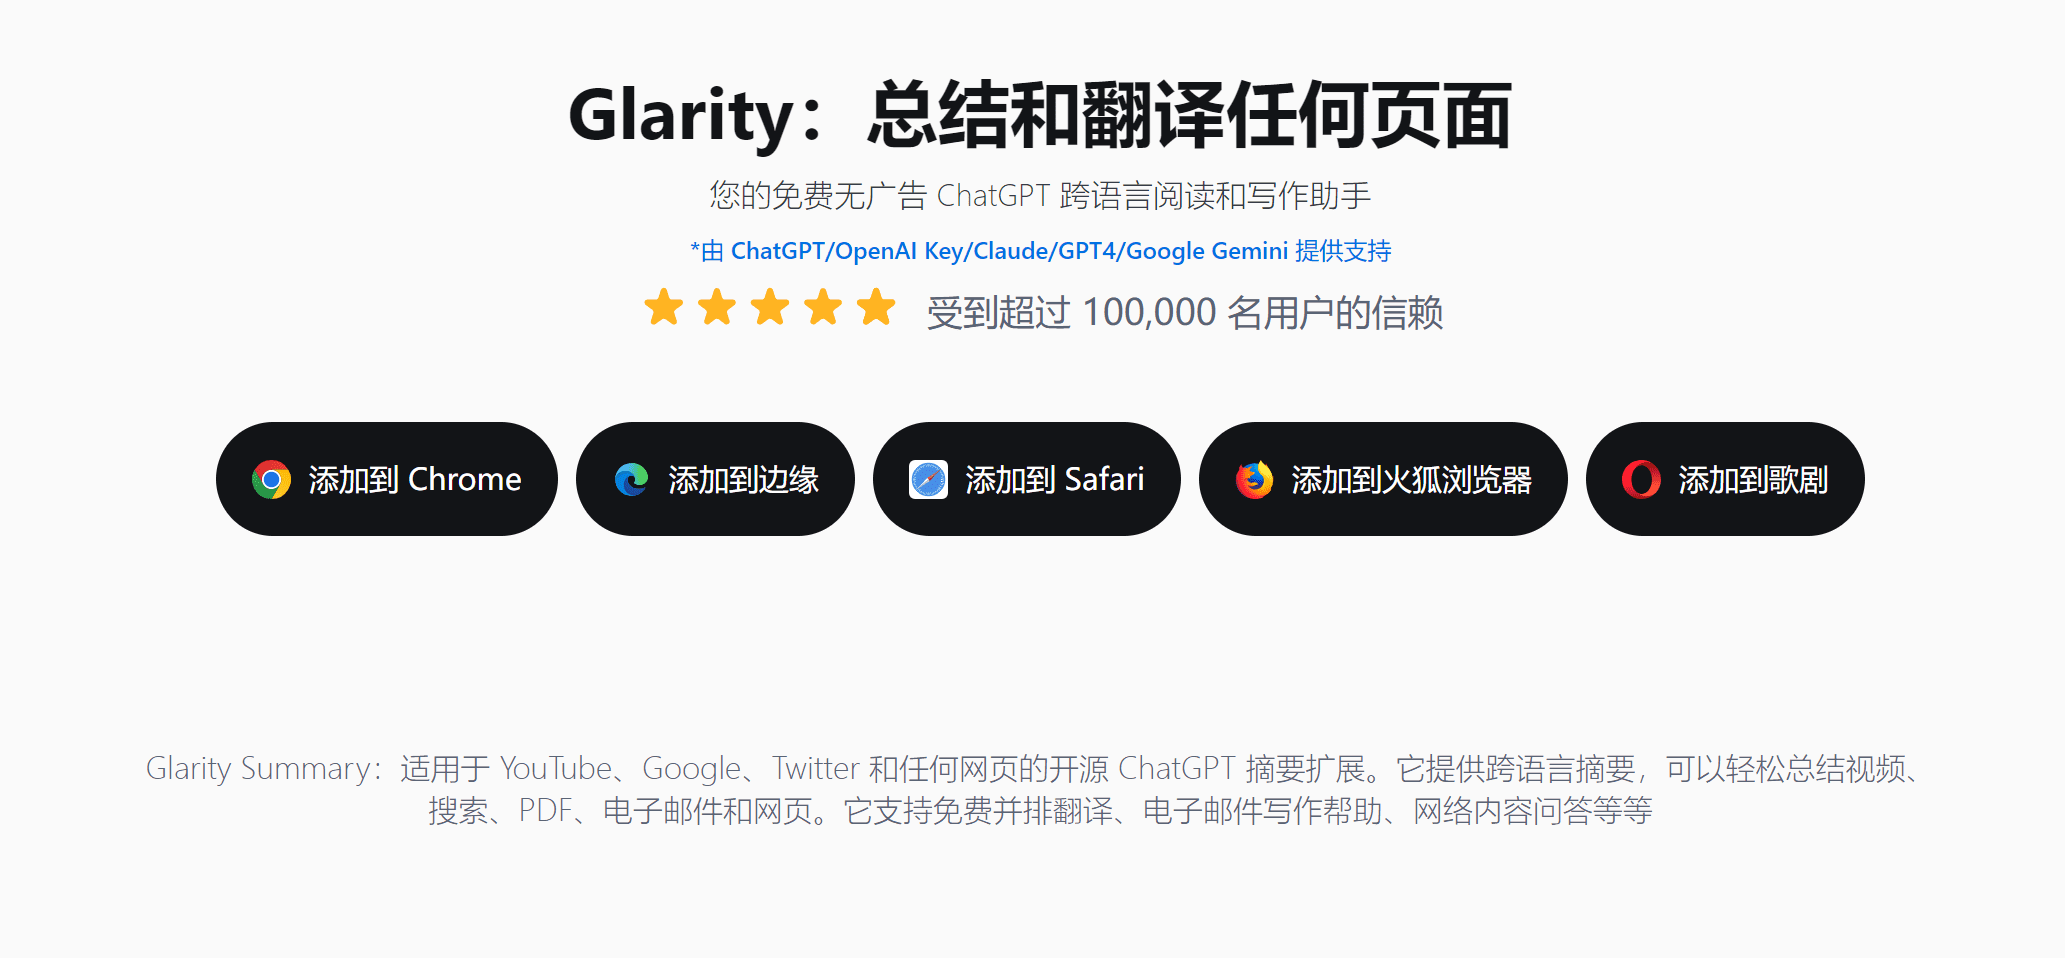 Glarity-1